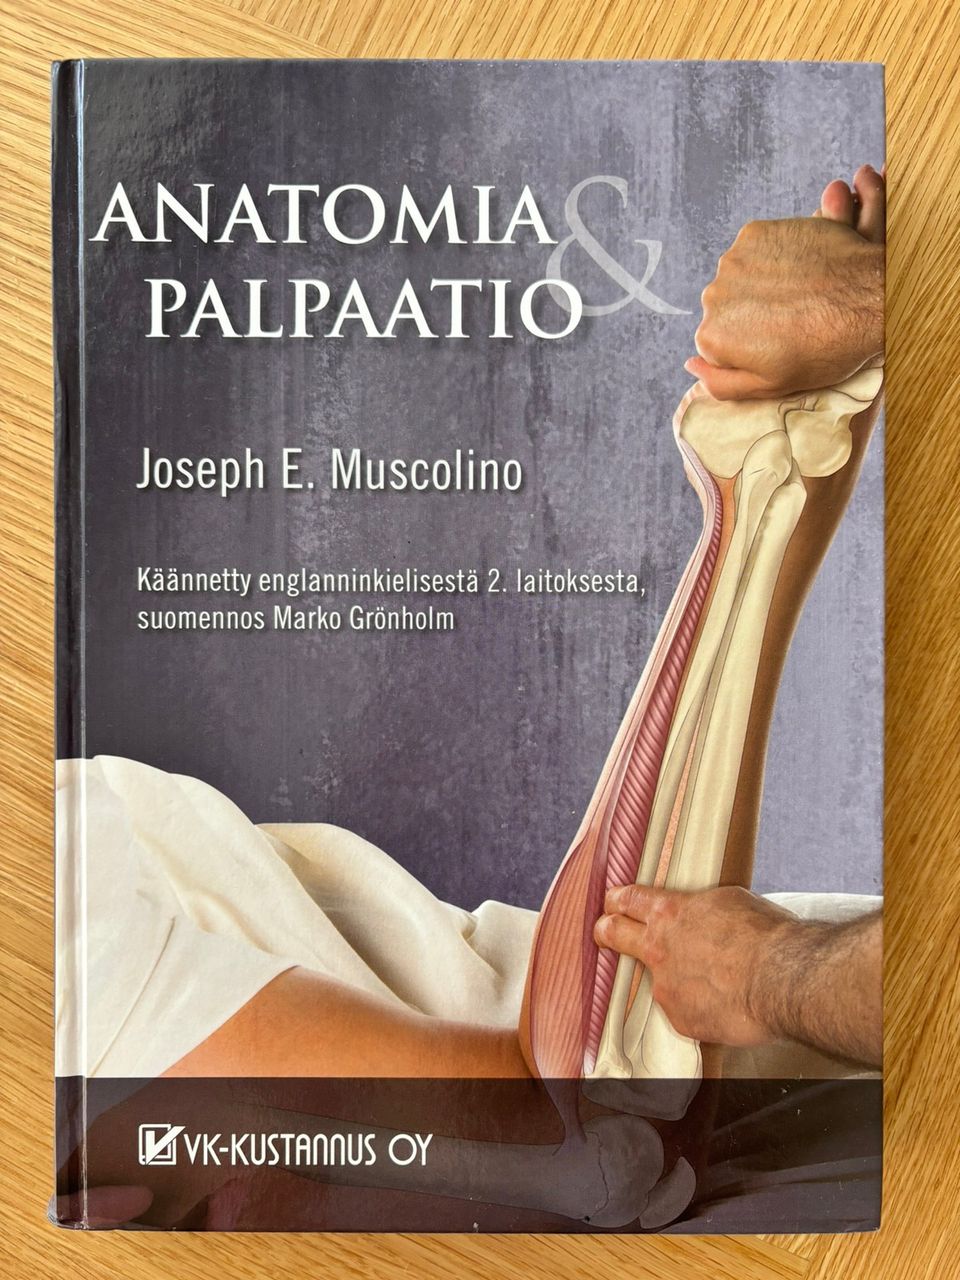 Kirja ”Anatomia & Palpaatio” Joseph E. Muscolino